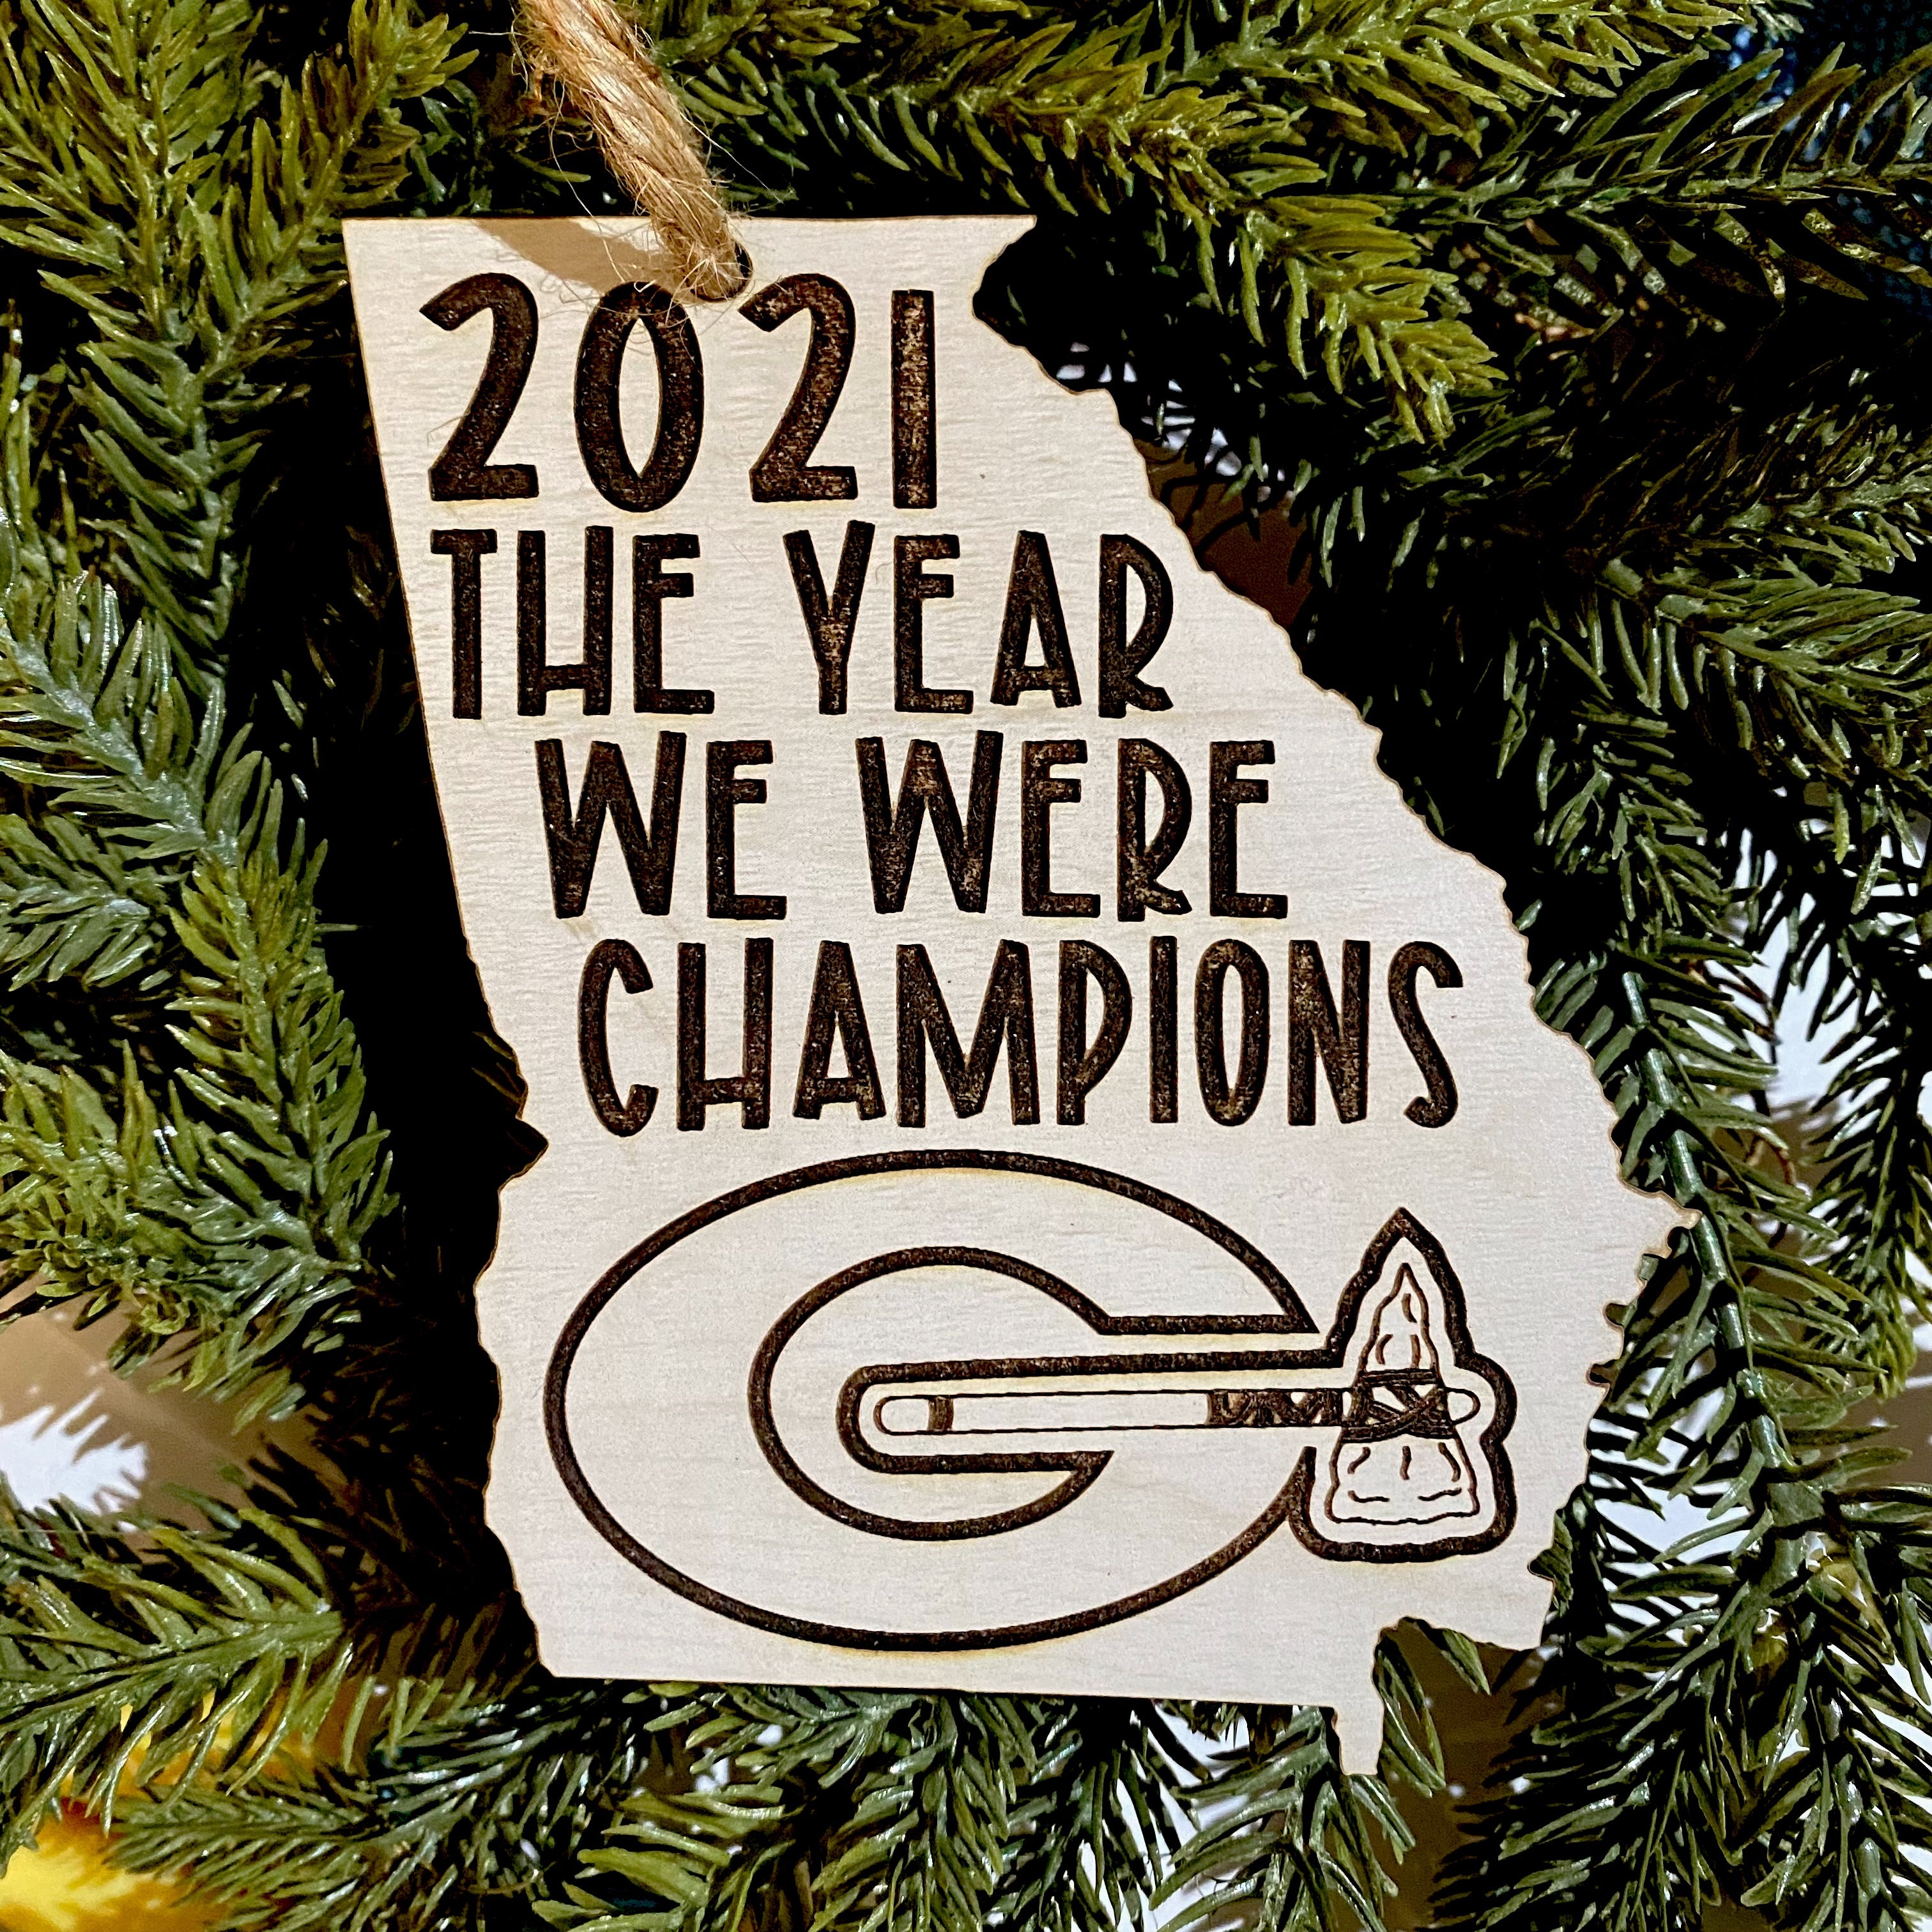 State of Georgia Champions Ornament- Celebratory Georgia/ Braves 2021 mash  up ornament 2021